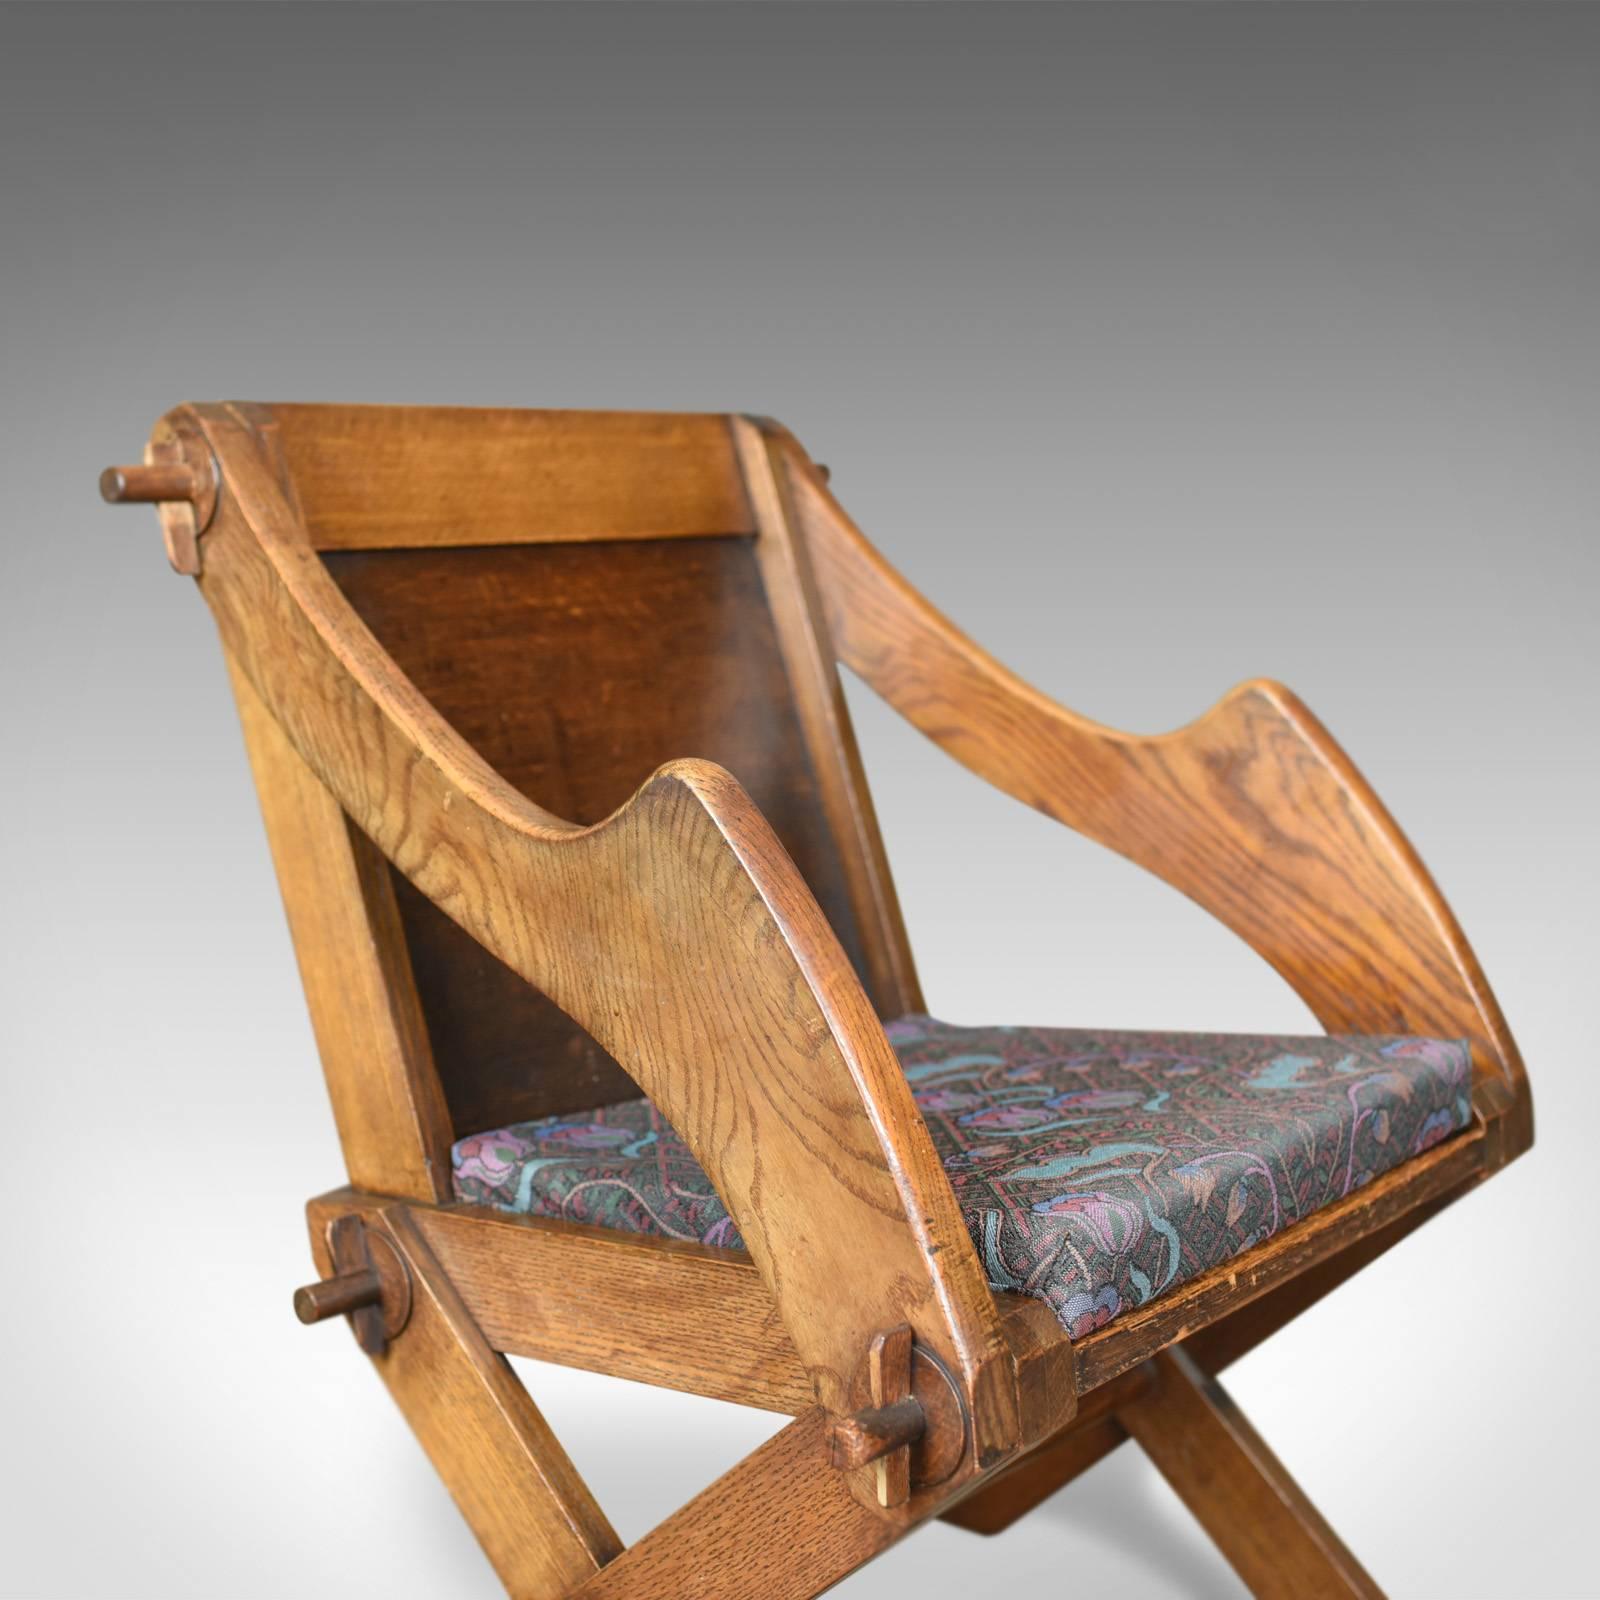 20th Century Antique Glastonbury Chair, English, Tudor Revival, Hall Seat, circa 1900